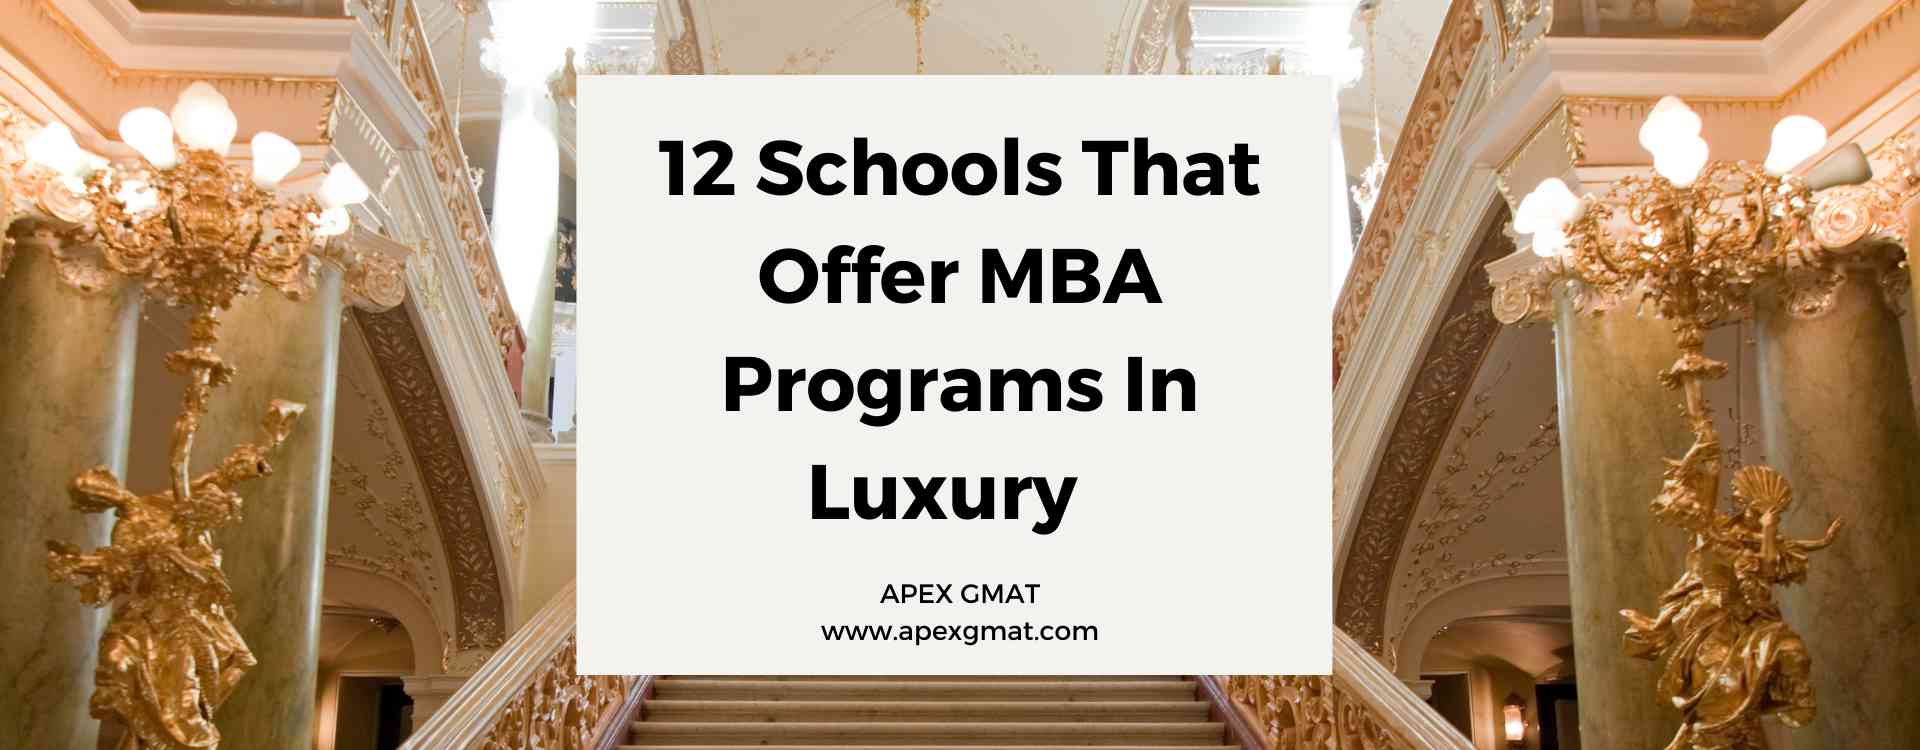 12 Schools That Offer MBA Programs In Luxury